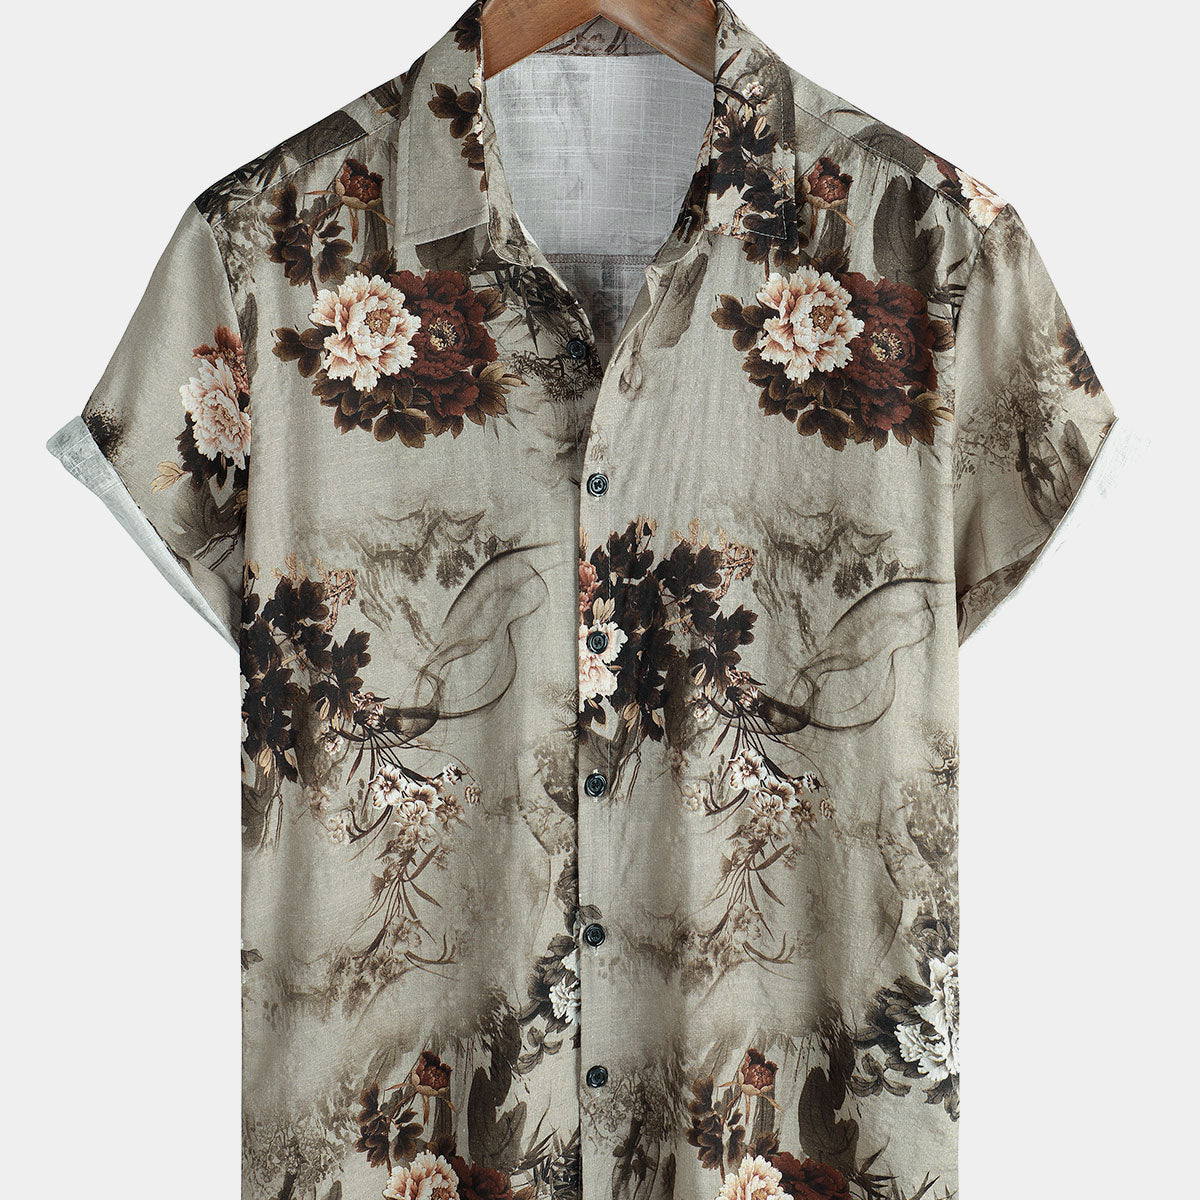 Men's Vintage Floral Casual Short Sleeve Button Up Shirt